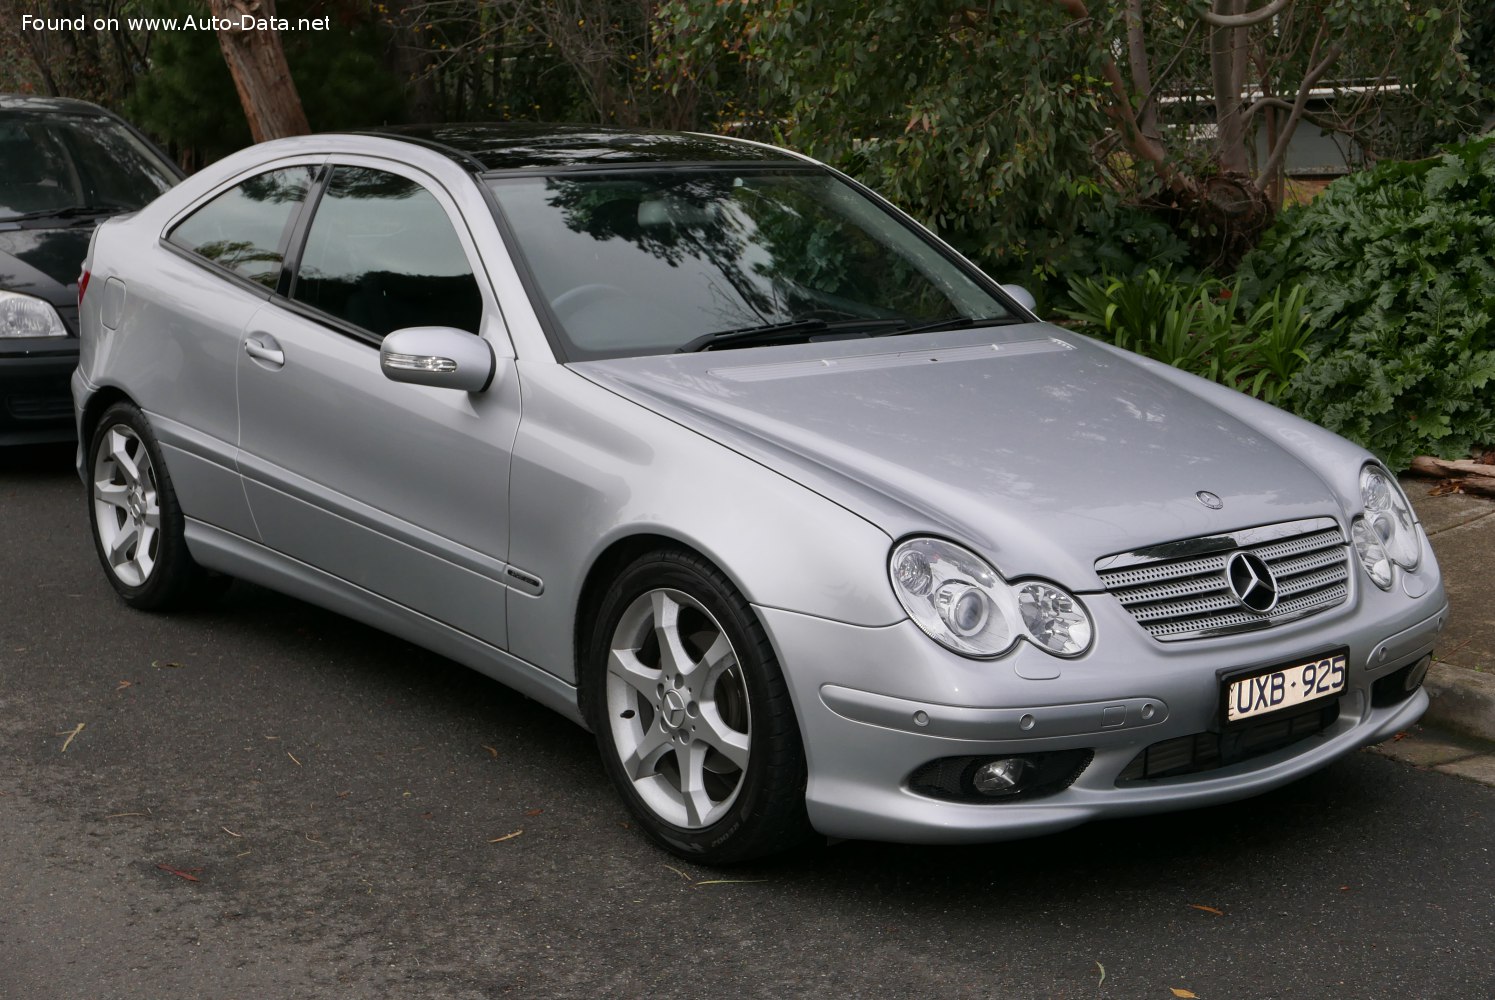 https://www.auto-data.net/images/f86/Mercedes-Benz-C-class-Sport-Coupe-CL203-facelift-2004.jpg